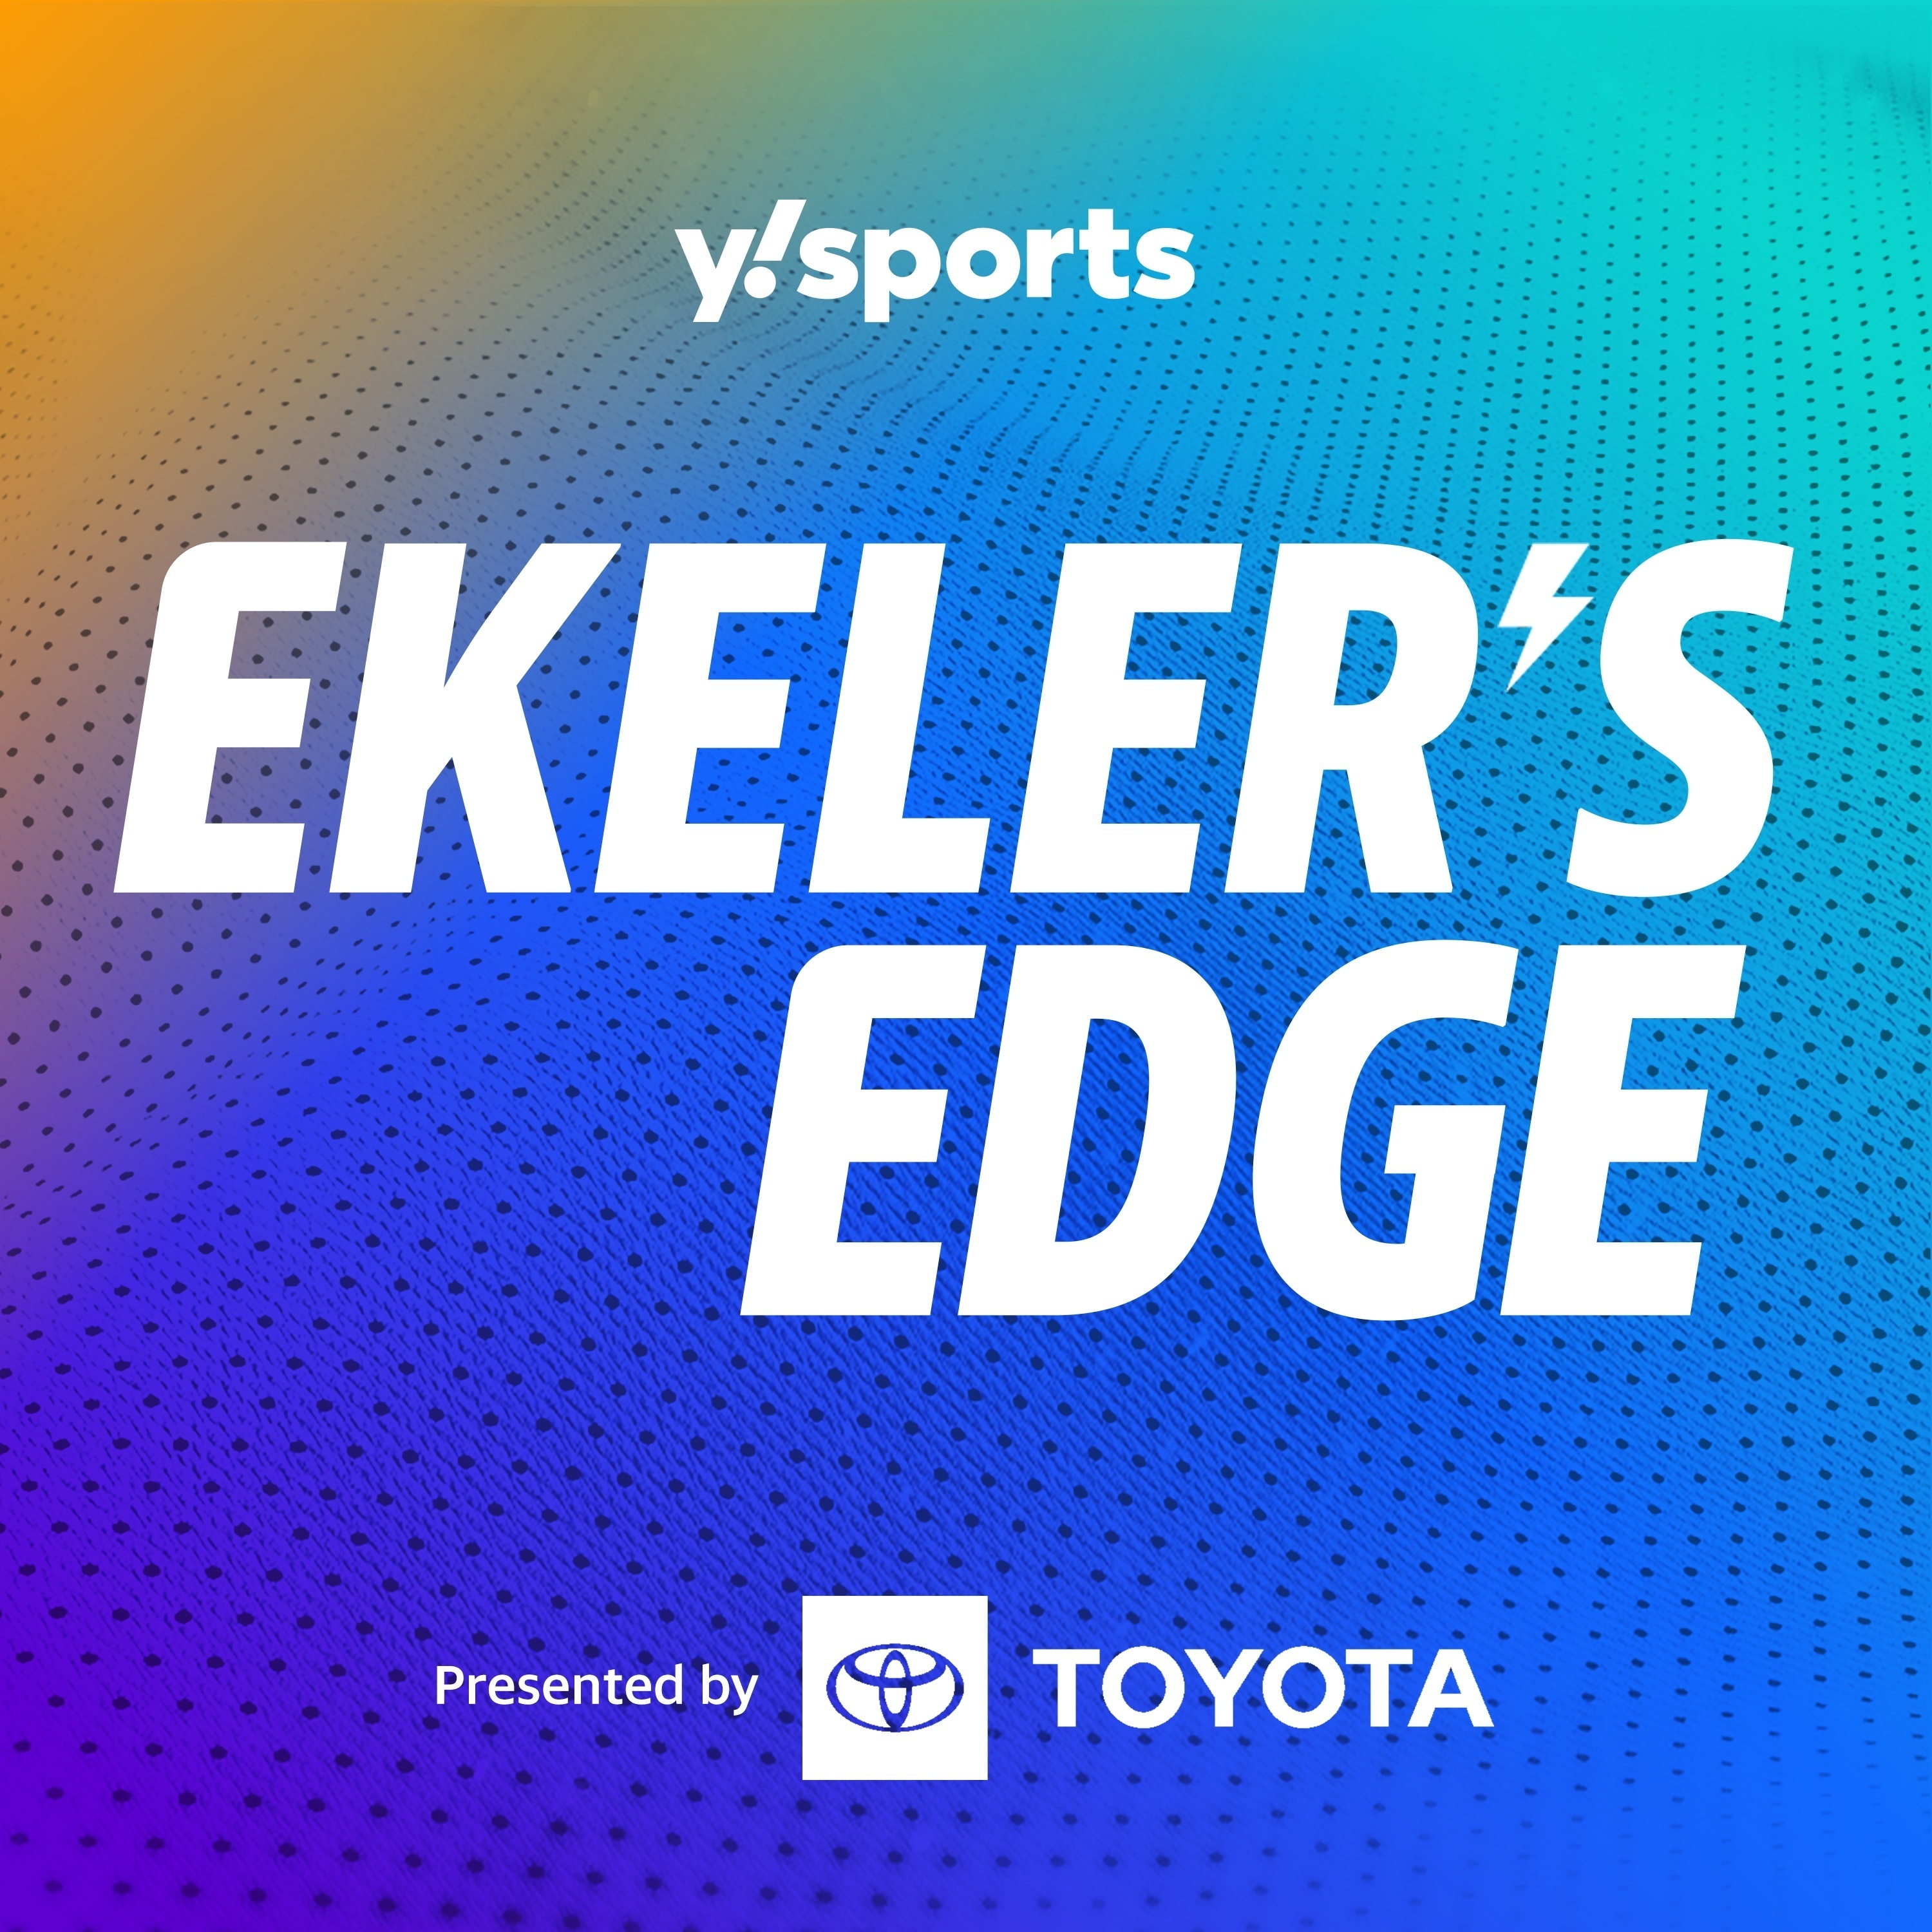 Ekeler’s Edge: The next Austin Ekeler? A deep dive on an emerging RB